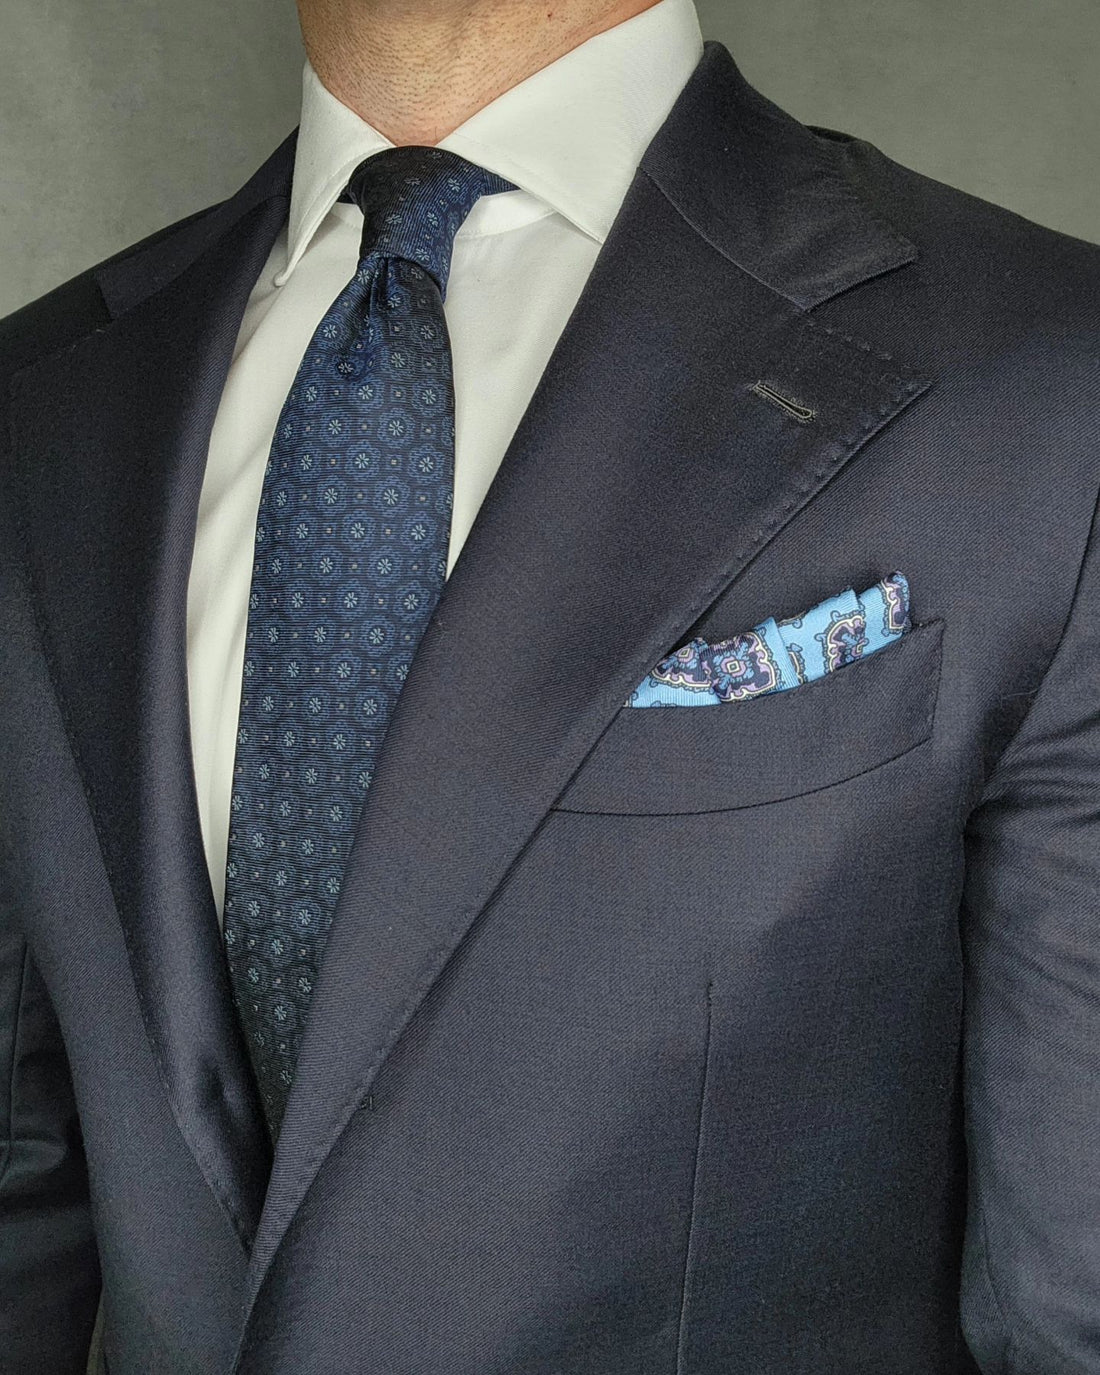 Black & Blue Geometric Foulard Silk Tie